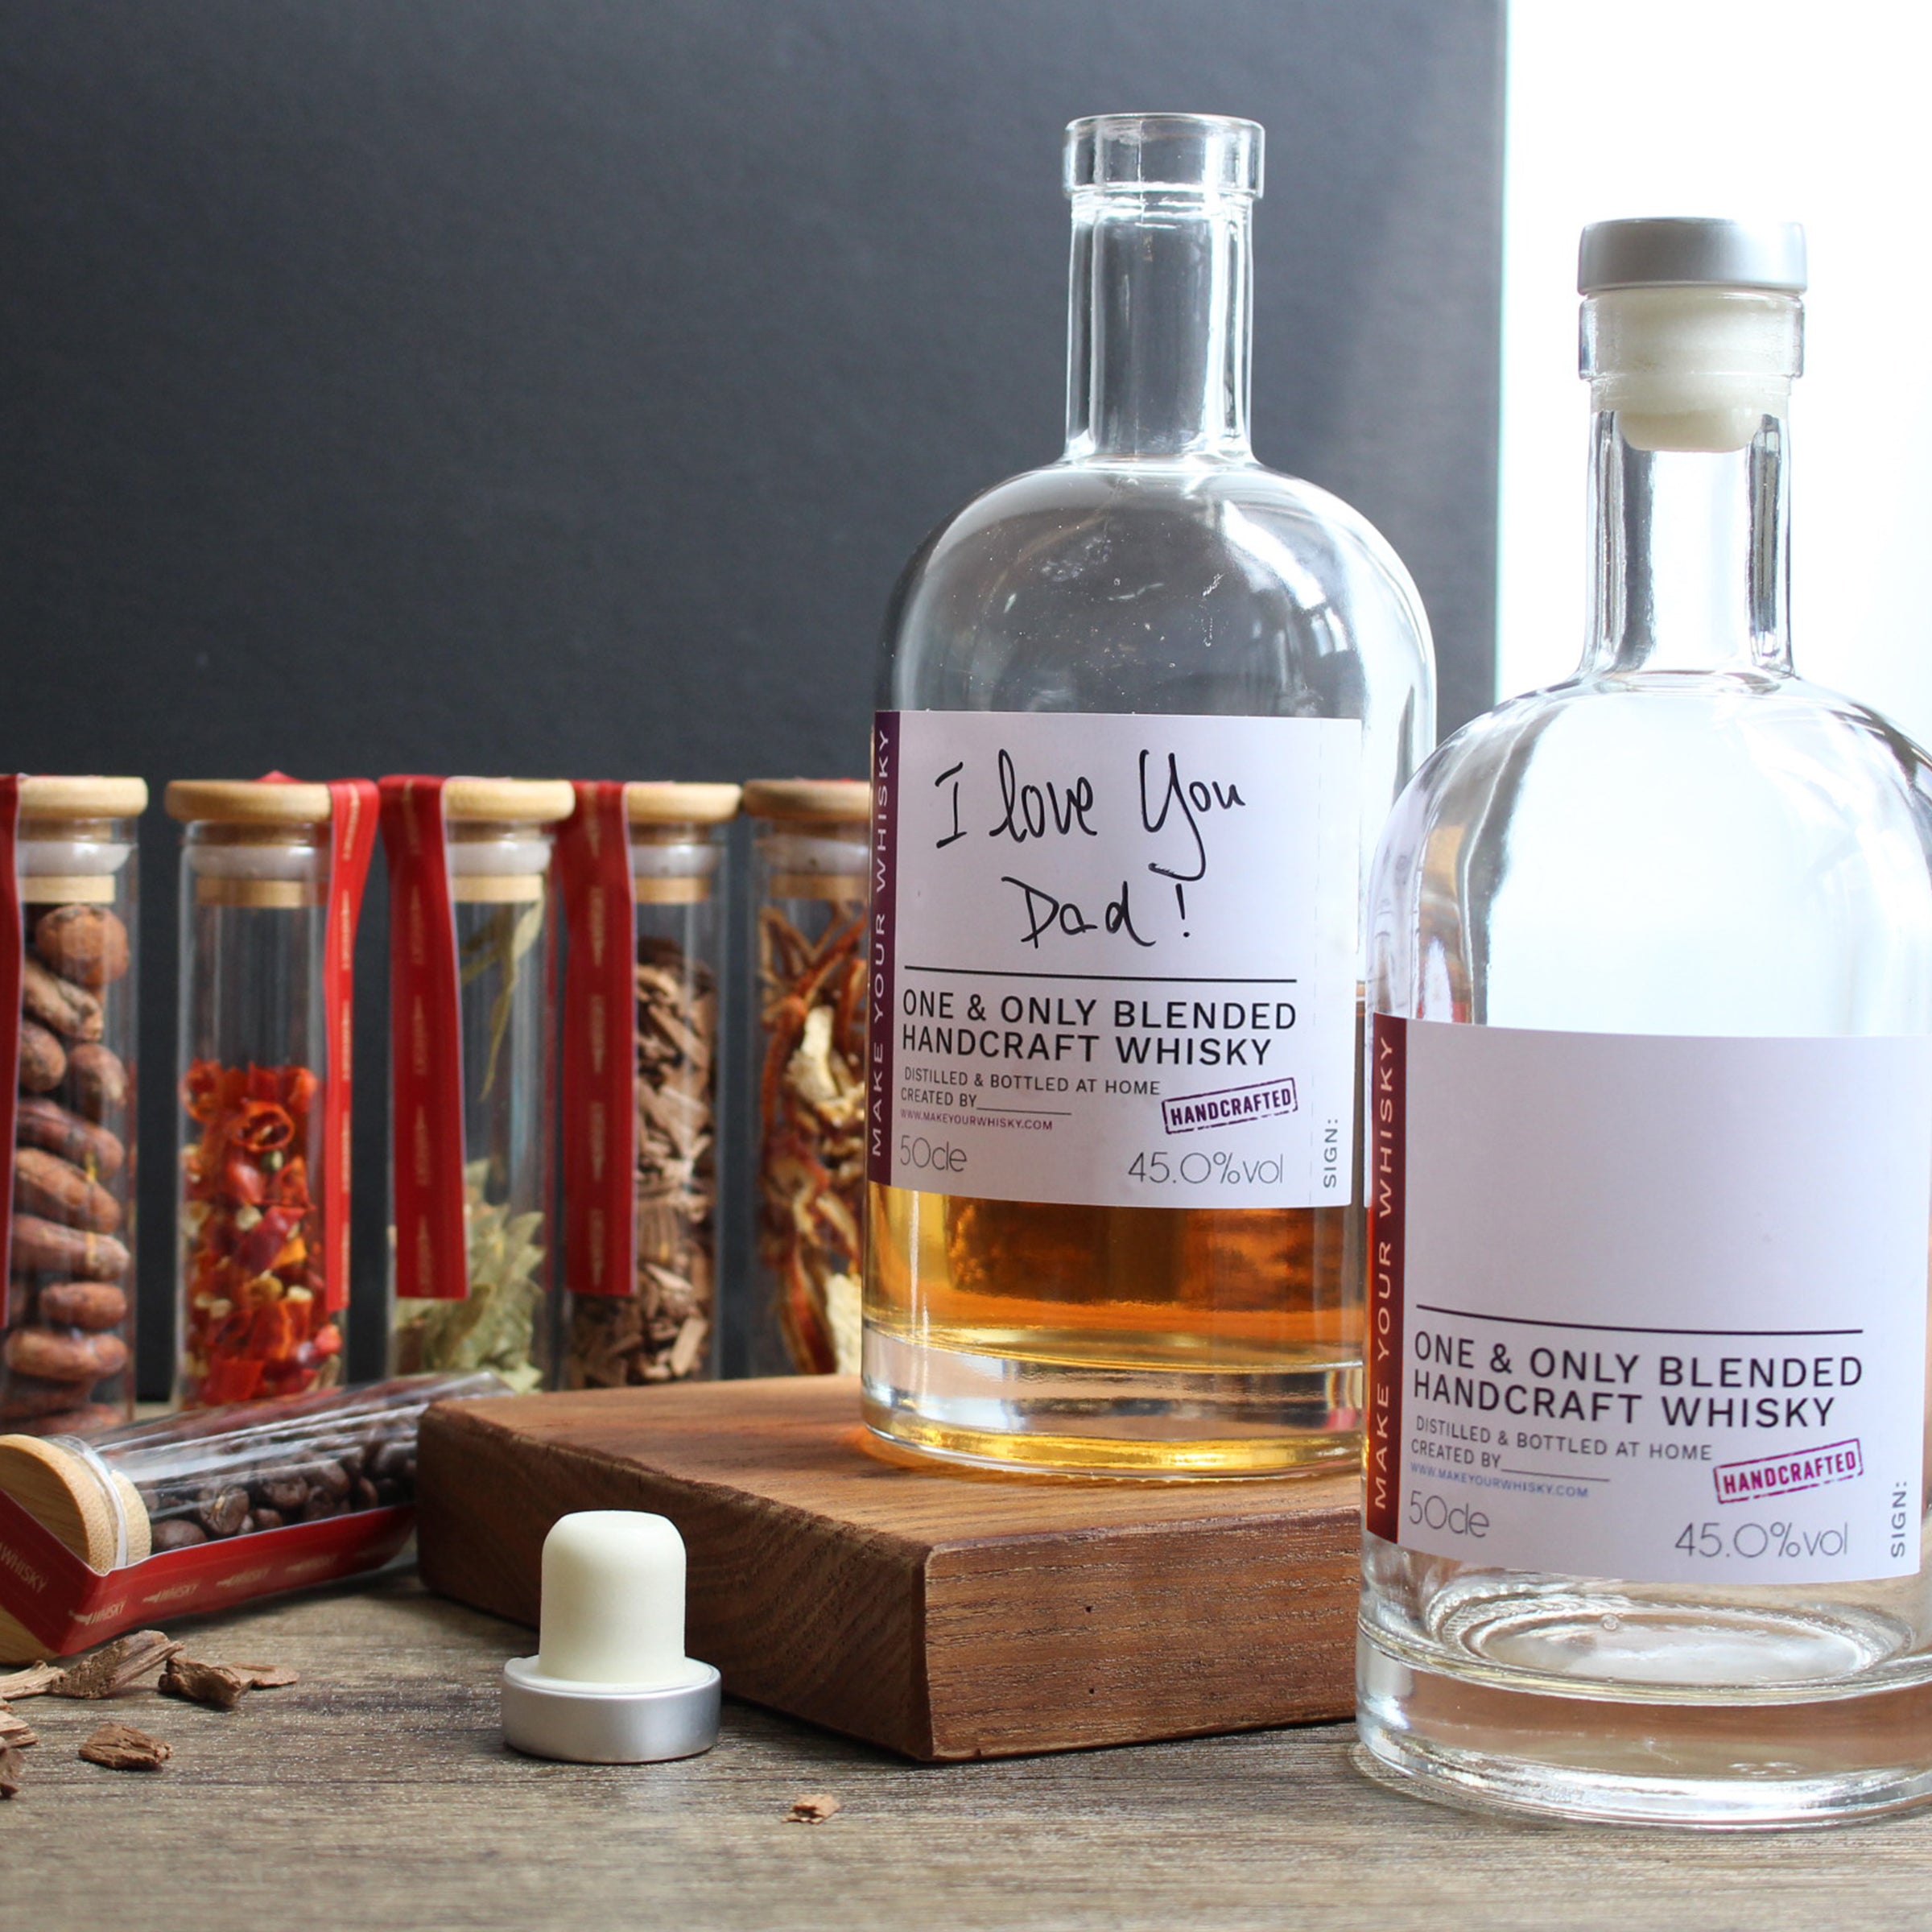 Make Your Whisky Kit - DIY 自製只屬自己口味的威士忌【一次就上手】 - Design Your Own Wine